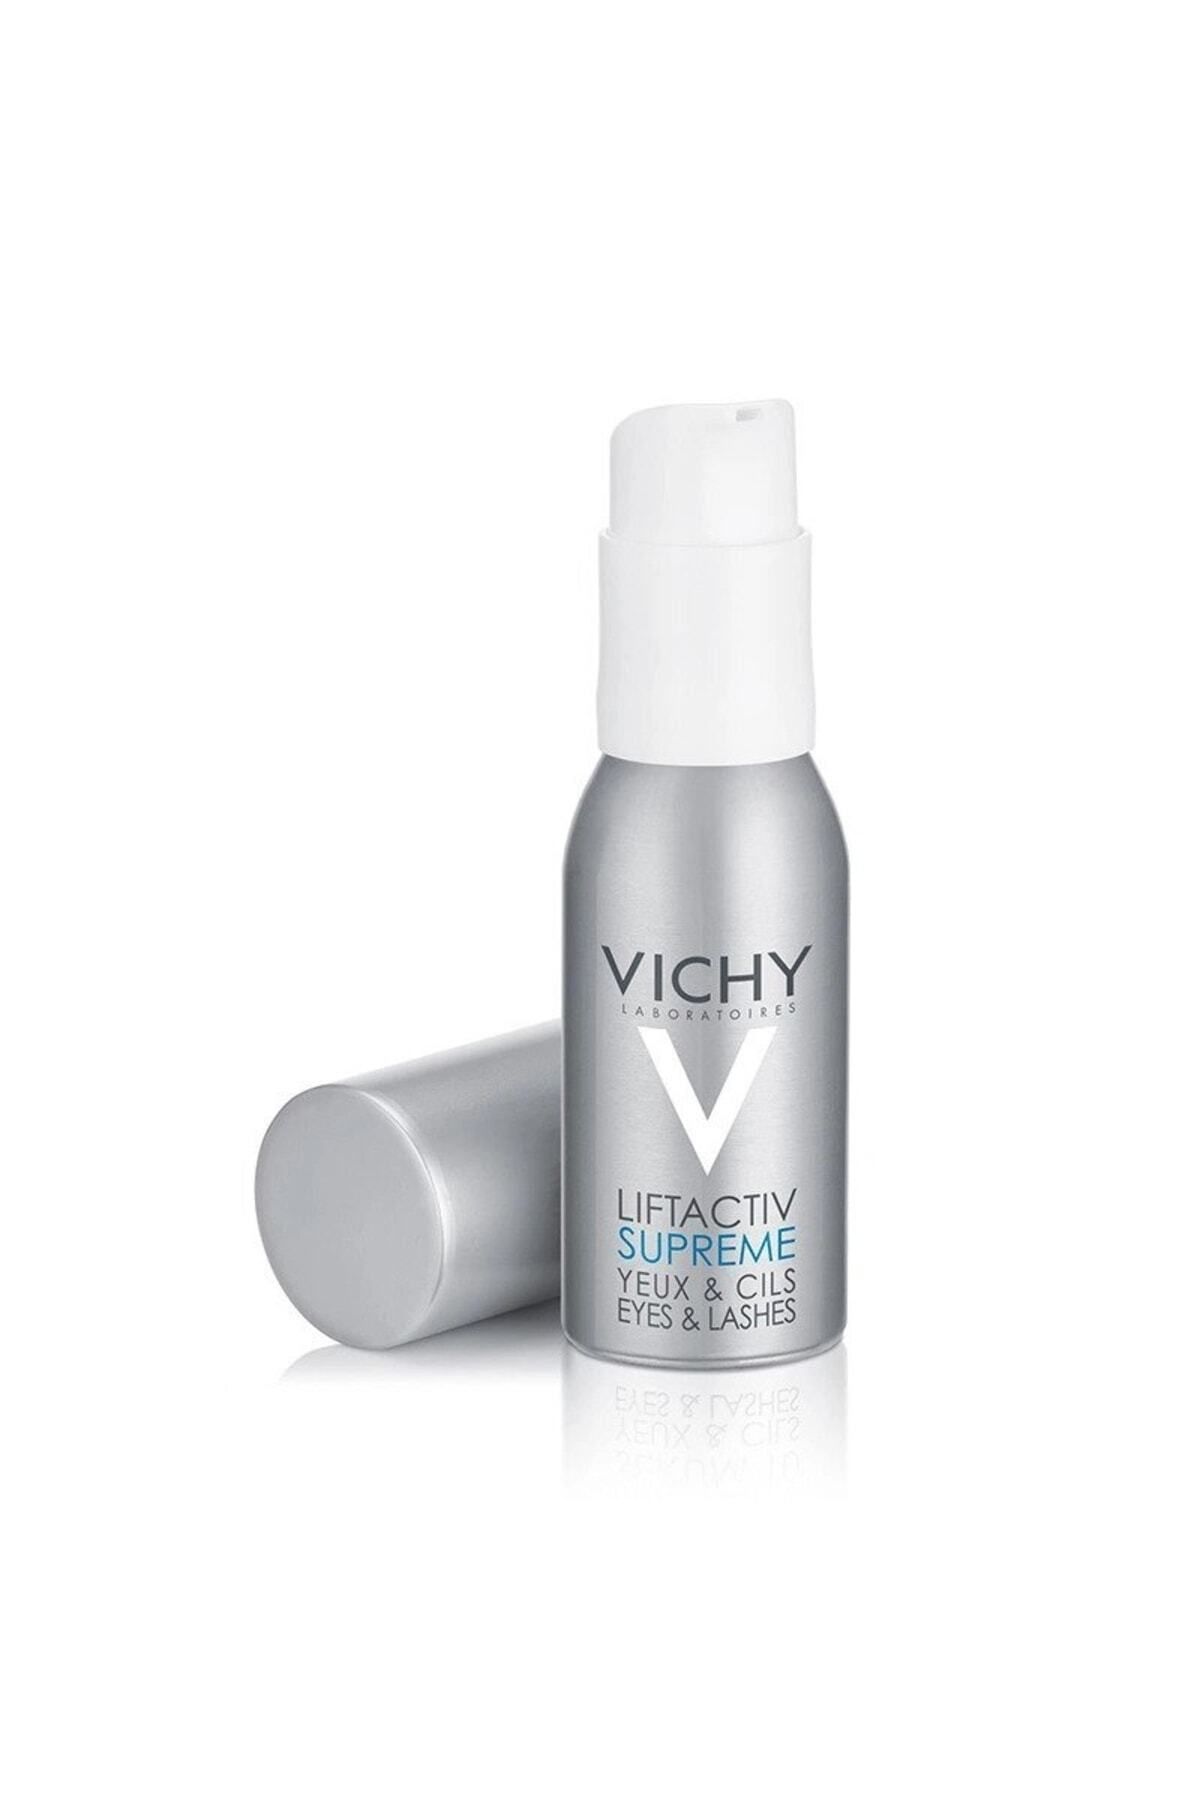 Vichy جوانسازی چشم و مژه: سرم ضد پیری و تقویت کننده مژه 15 میلی لیتر